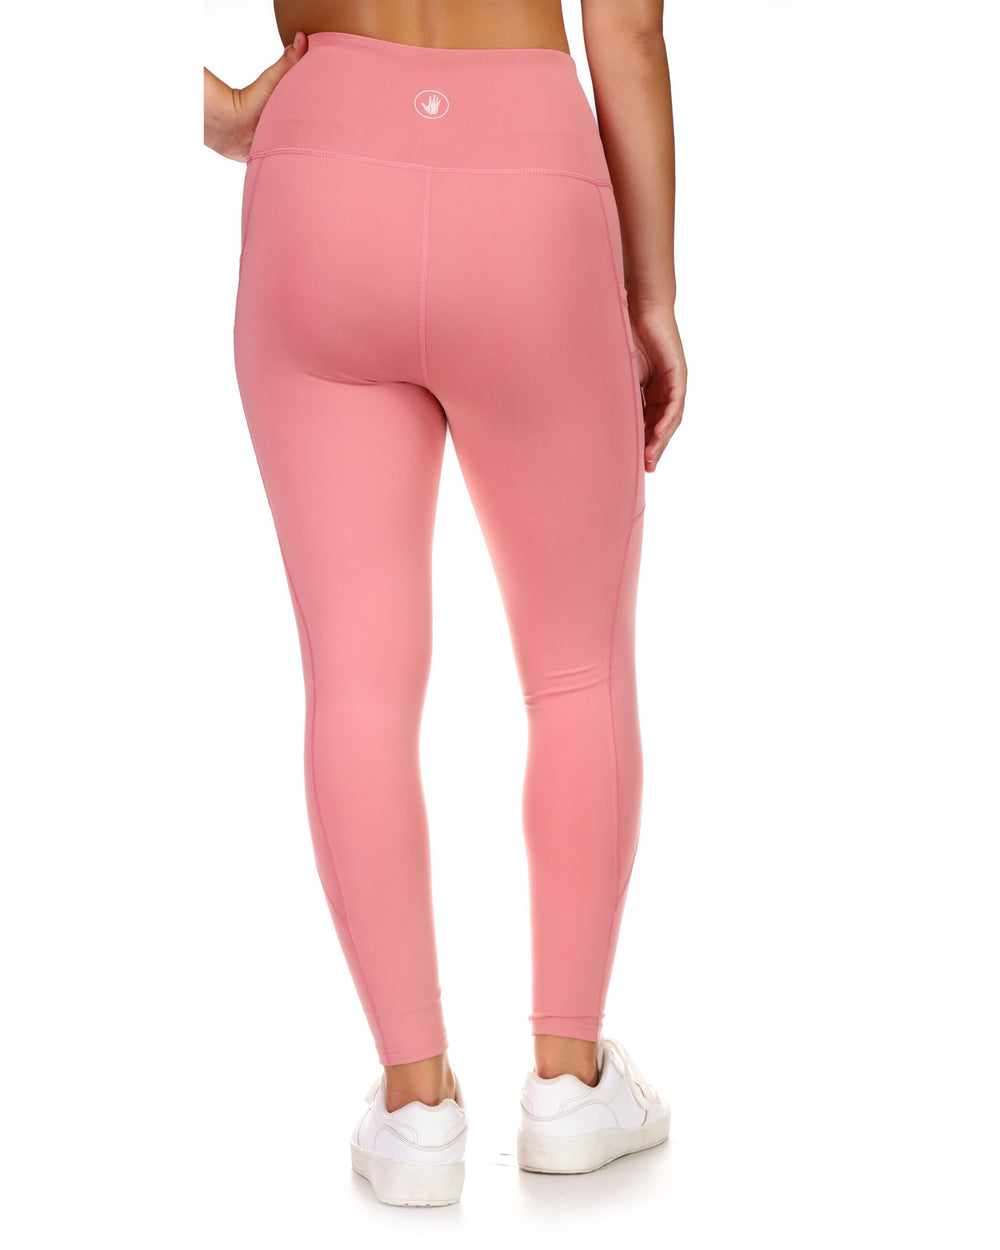 Breezy 7/8 High-Rise Legging w/ Zippered Pockets - Pink - Body Glove